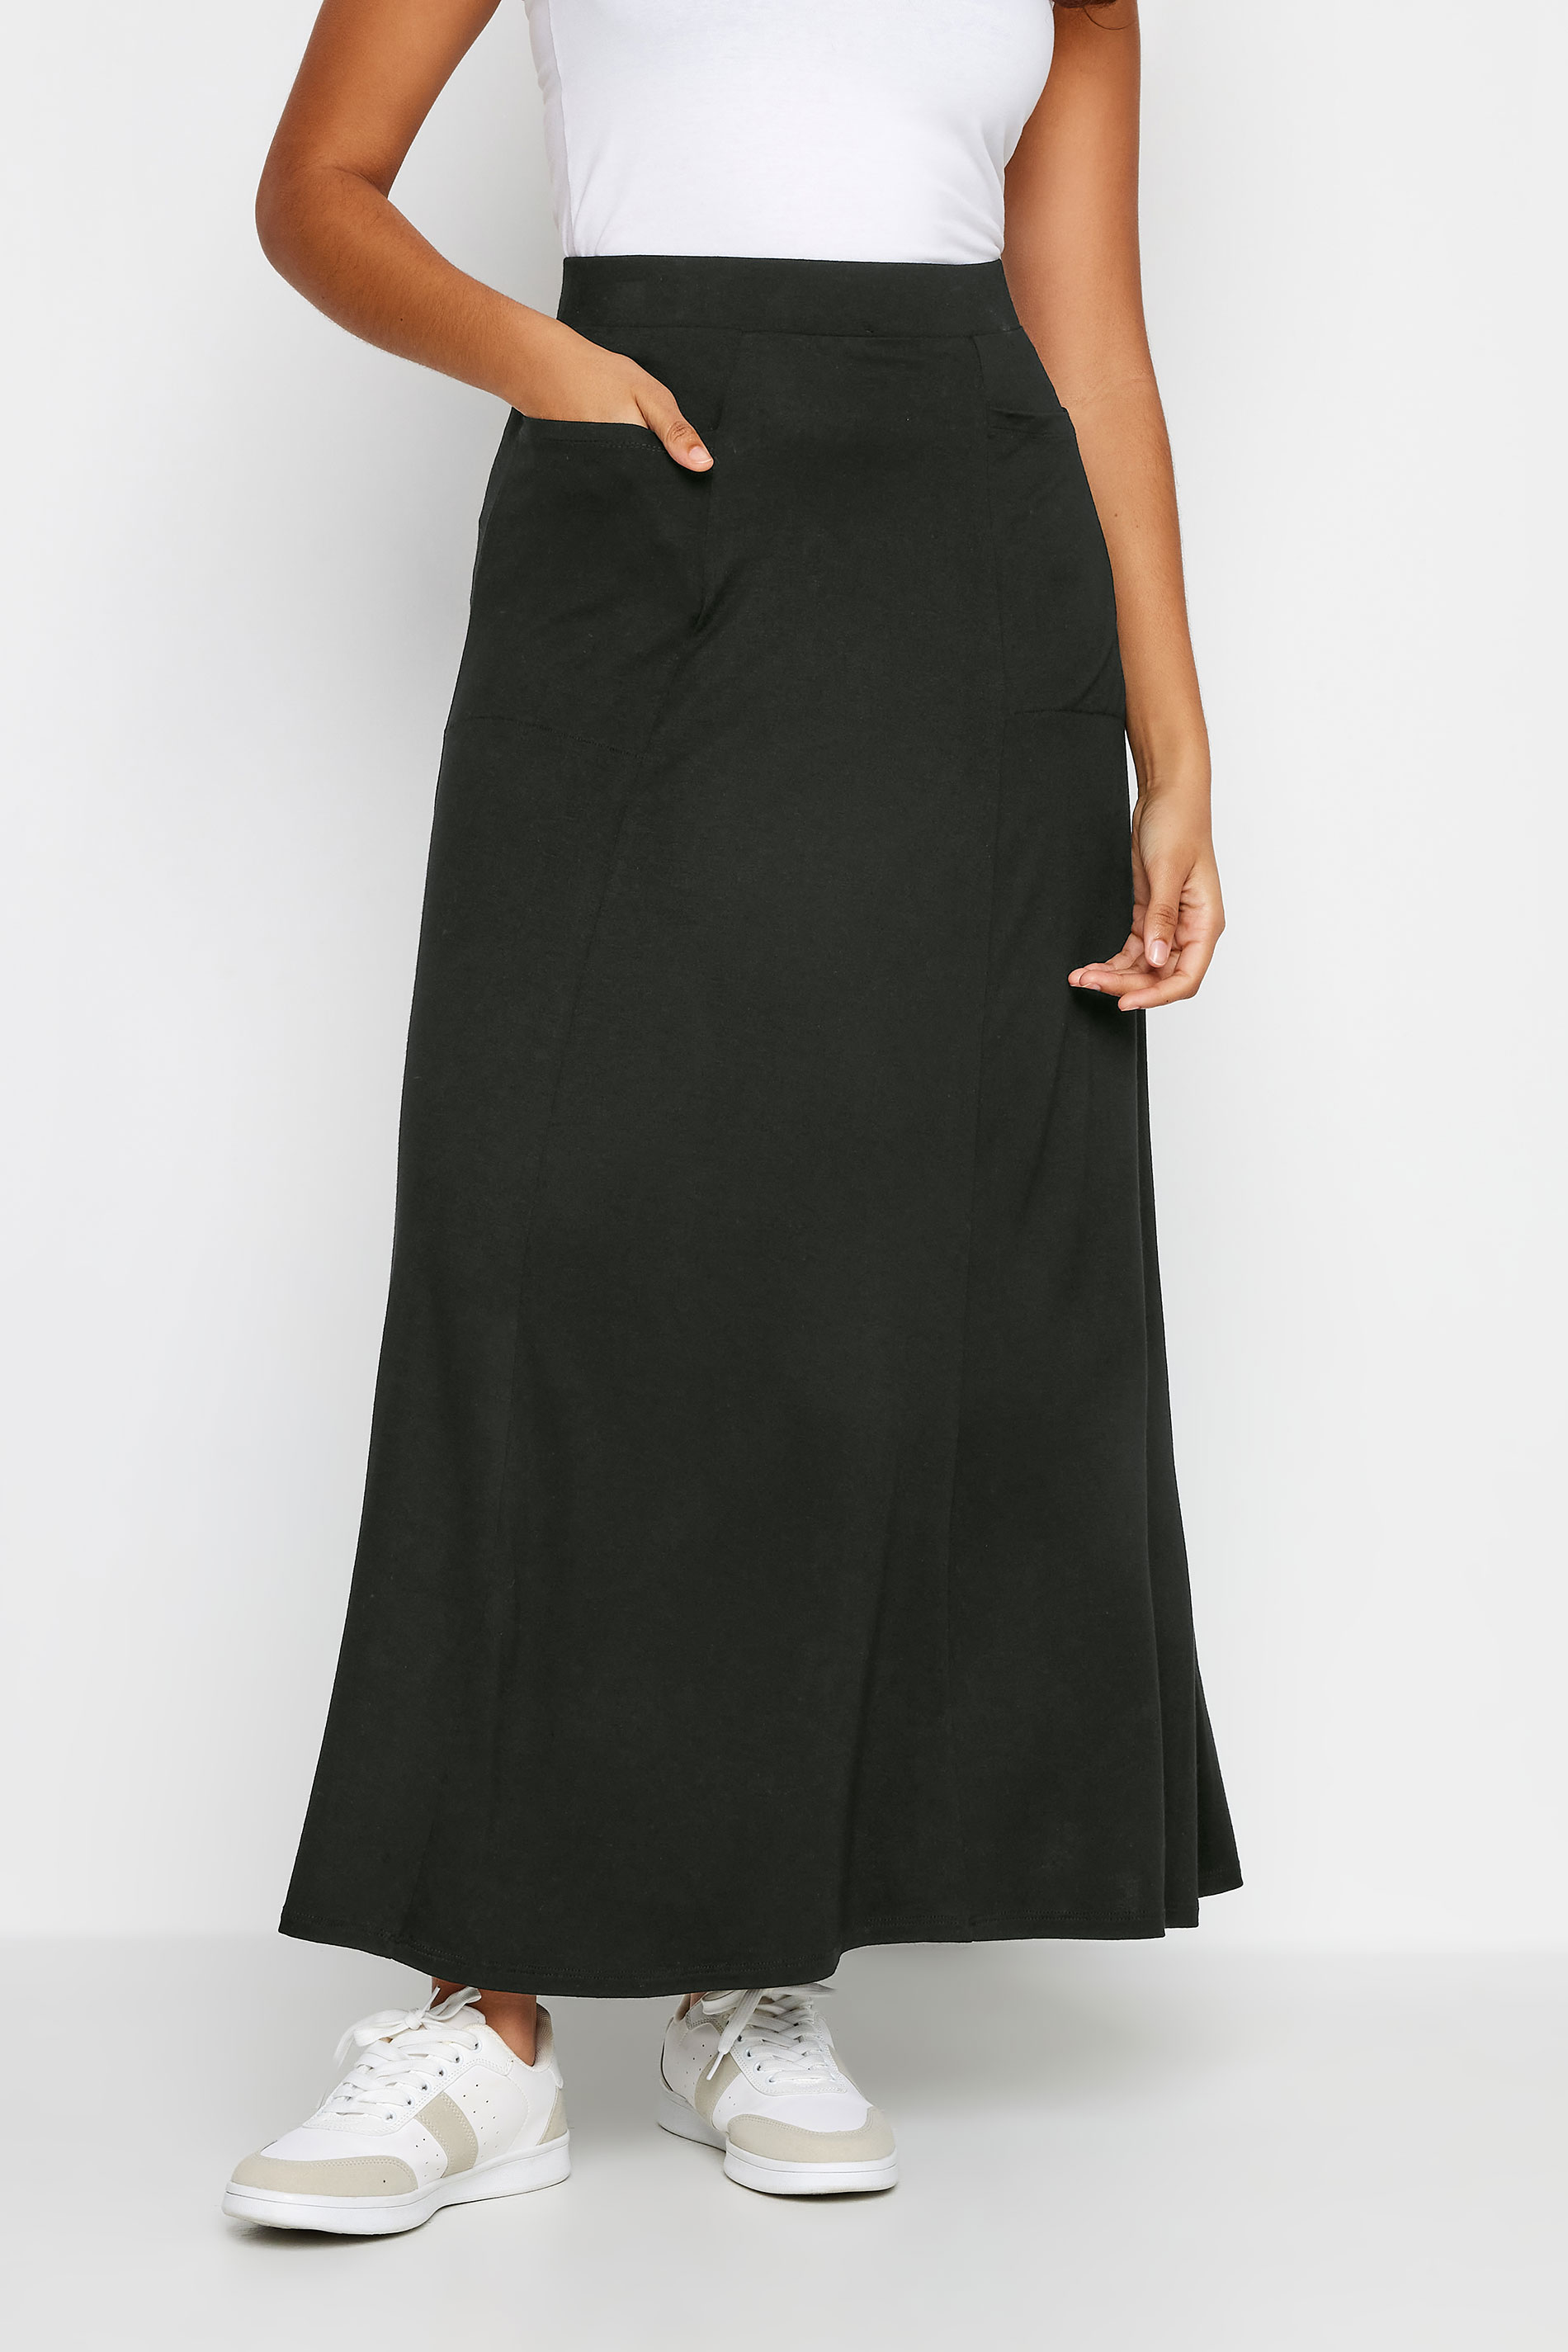 M&Co Black Pocket Maxi Skirt | M&Co 1